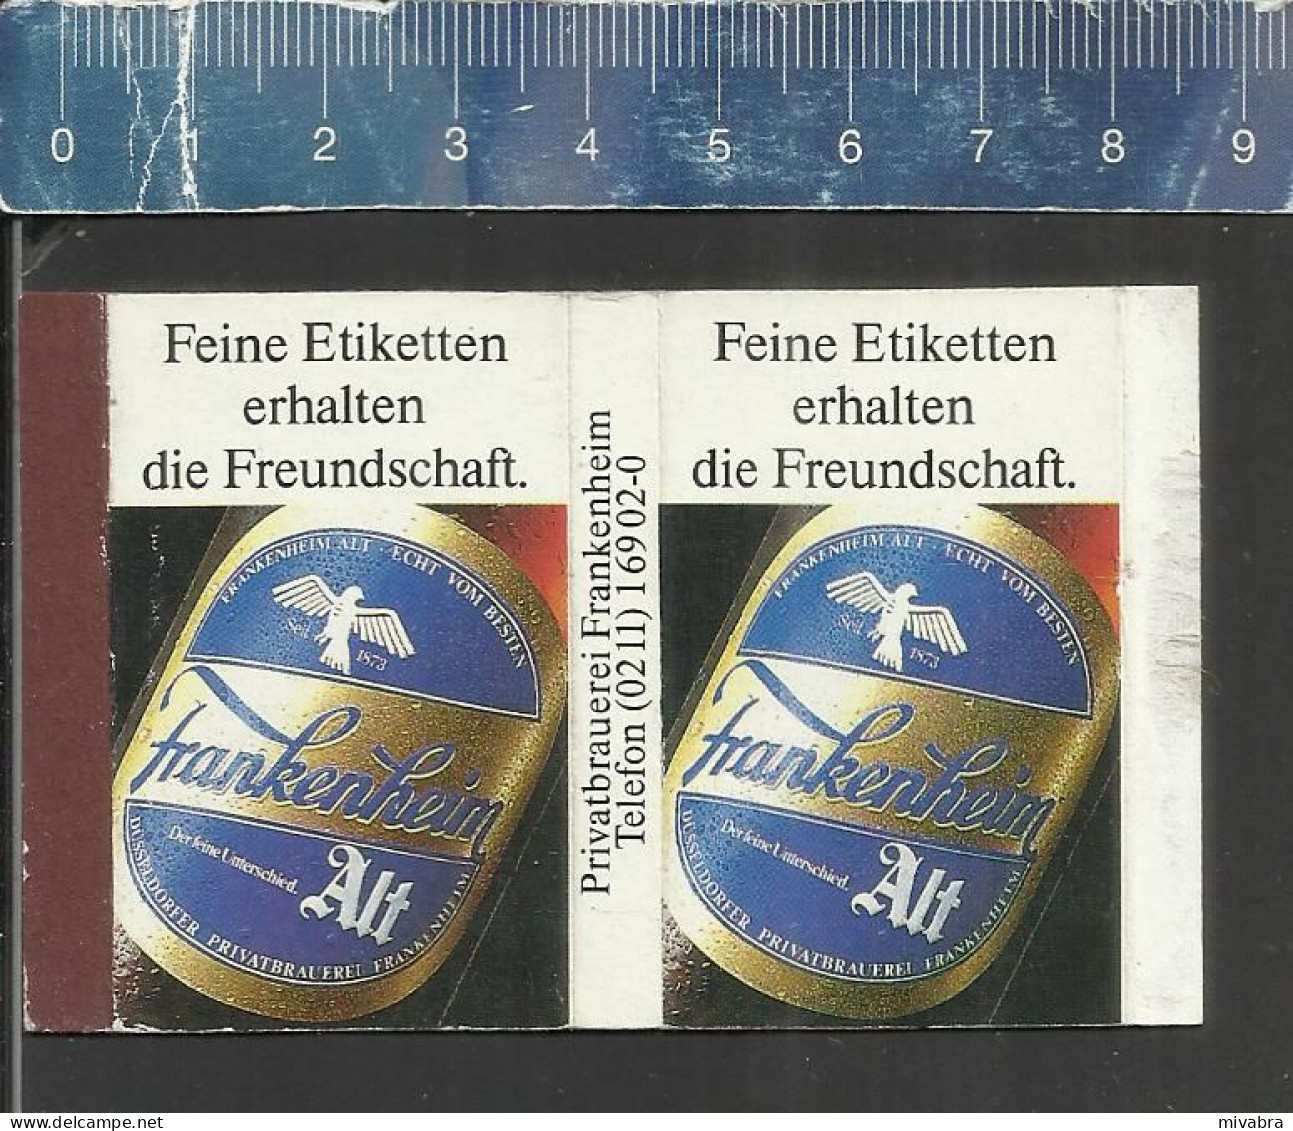 DÜSSELDORFER PRIVATBRAUEREI FRANKENHEIM ALT ( PILSNER BIER BEER ALE BIERE ) -  OLD  MATCHBOX SKILLET GERMANY - Boites D'allumettes - Etiquettes